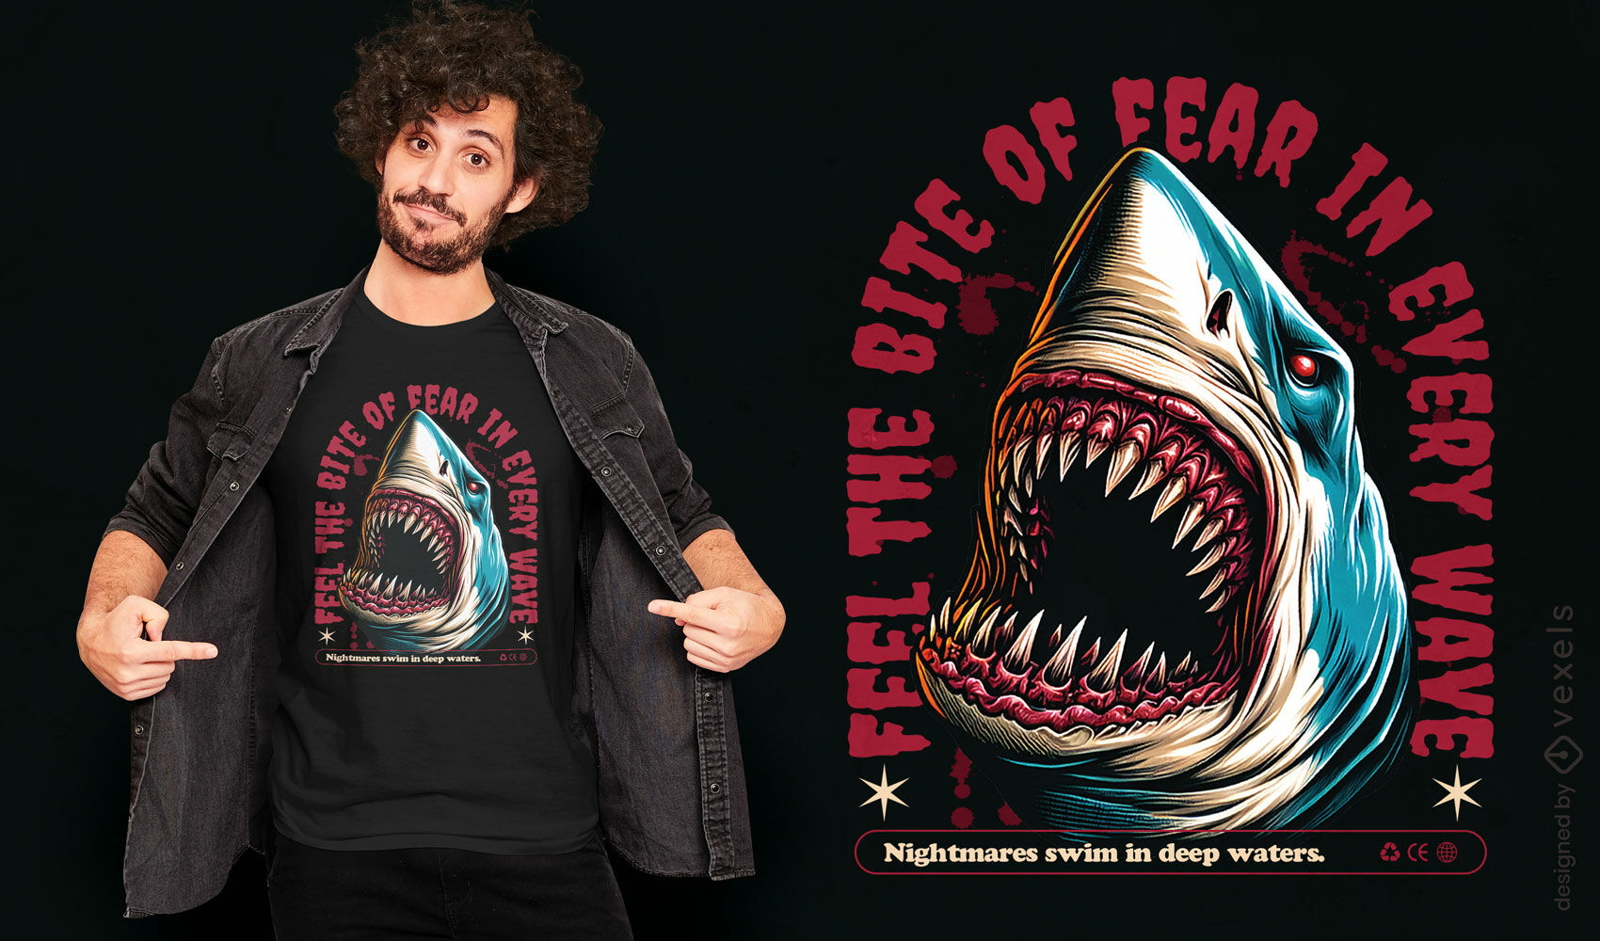 Shark bite t-shirt design